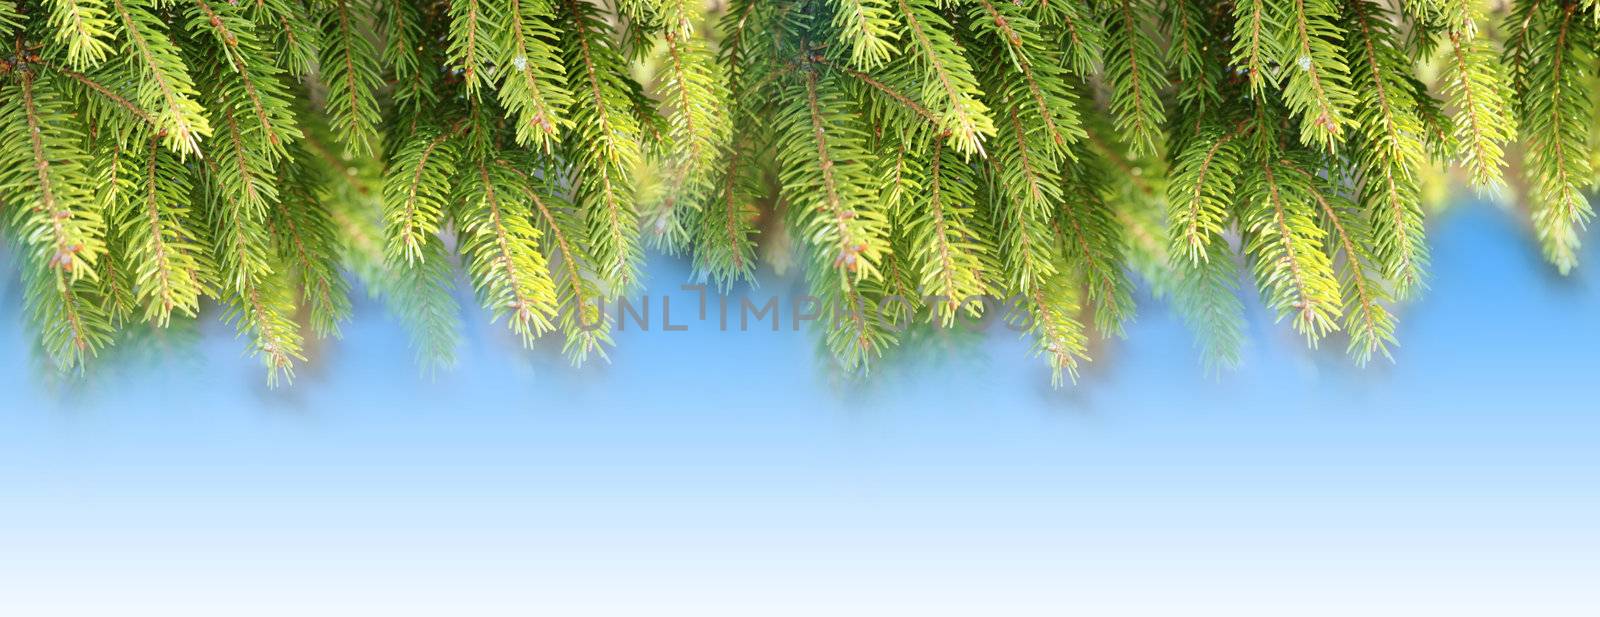 fir branches by photochecker